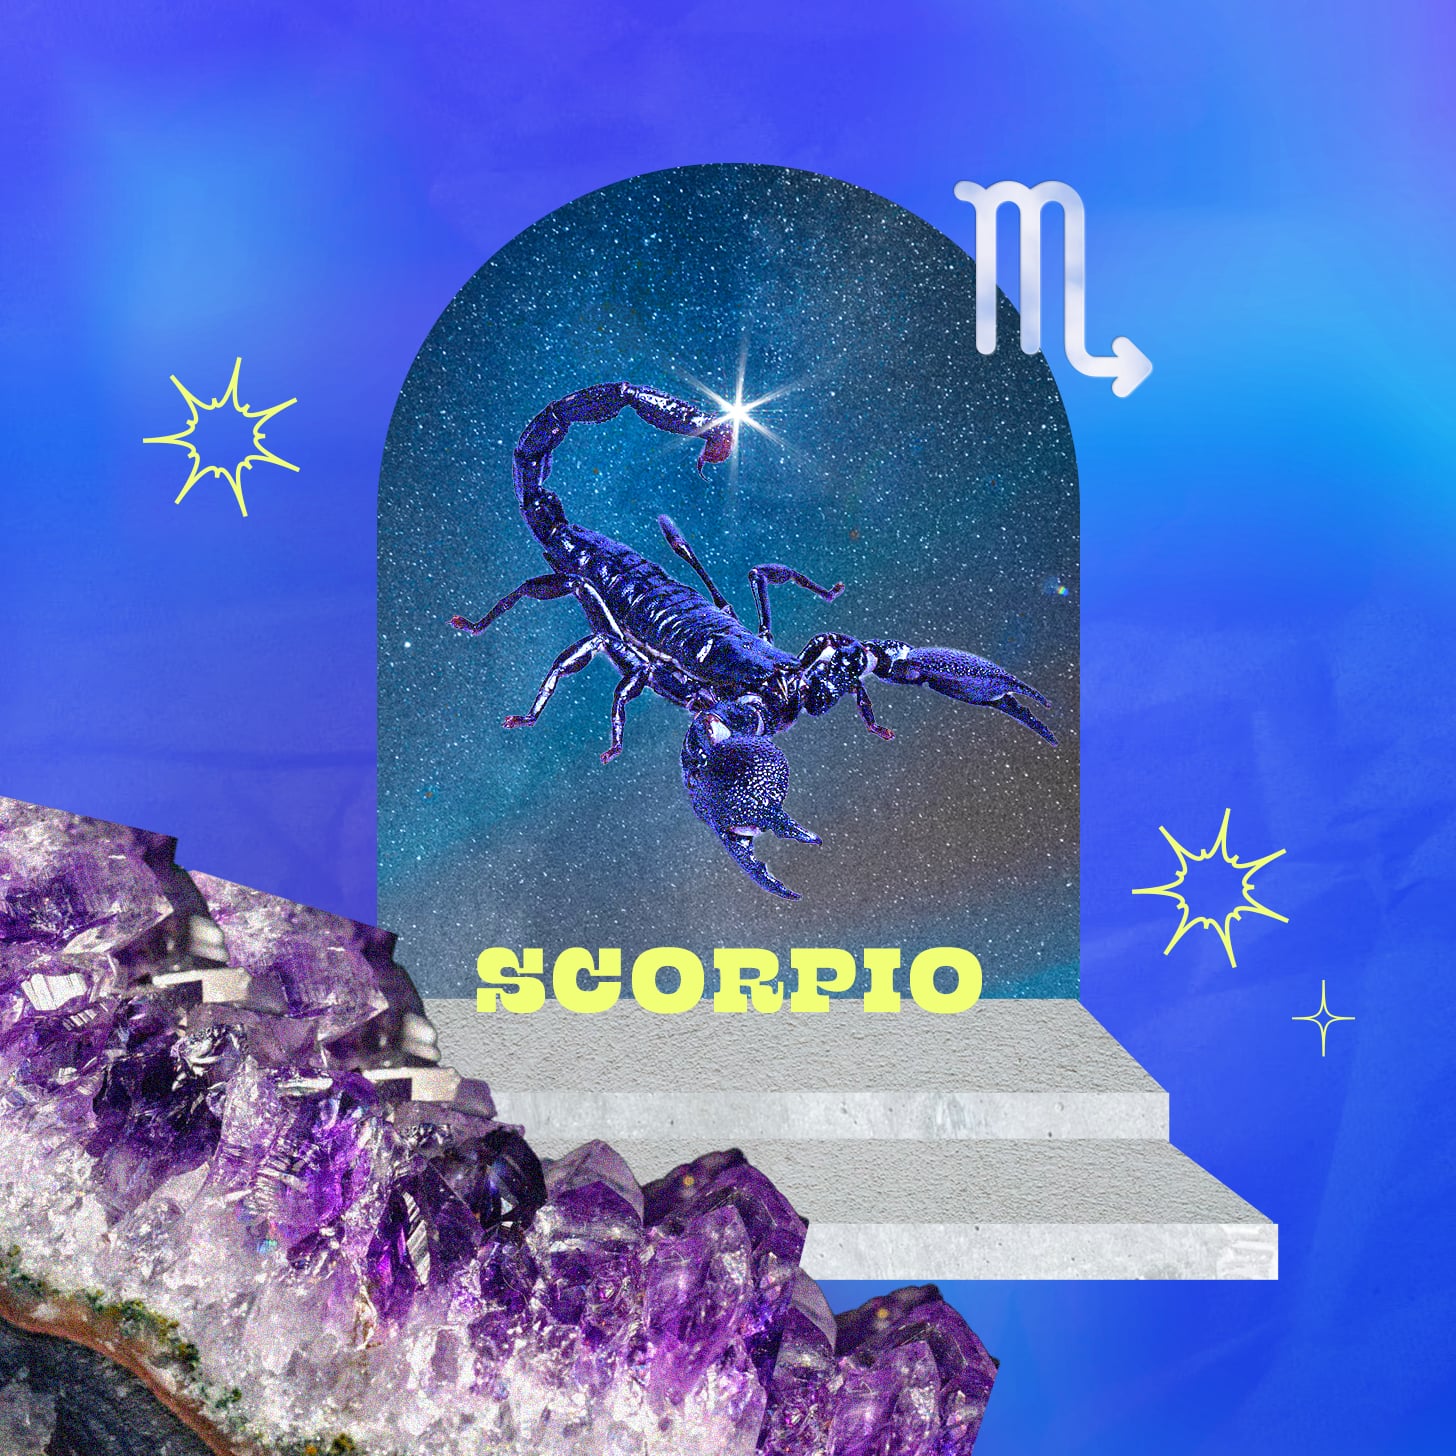 Scorpio weekly horoscope for September 18, 2022